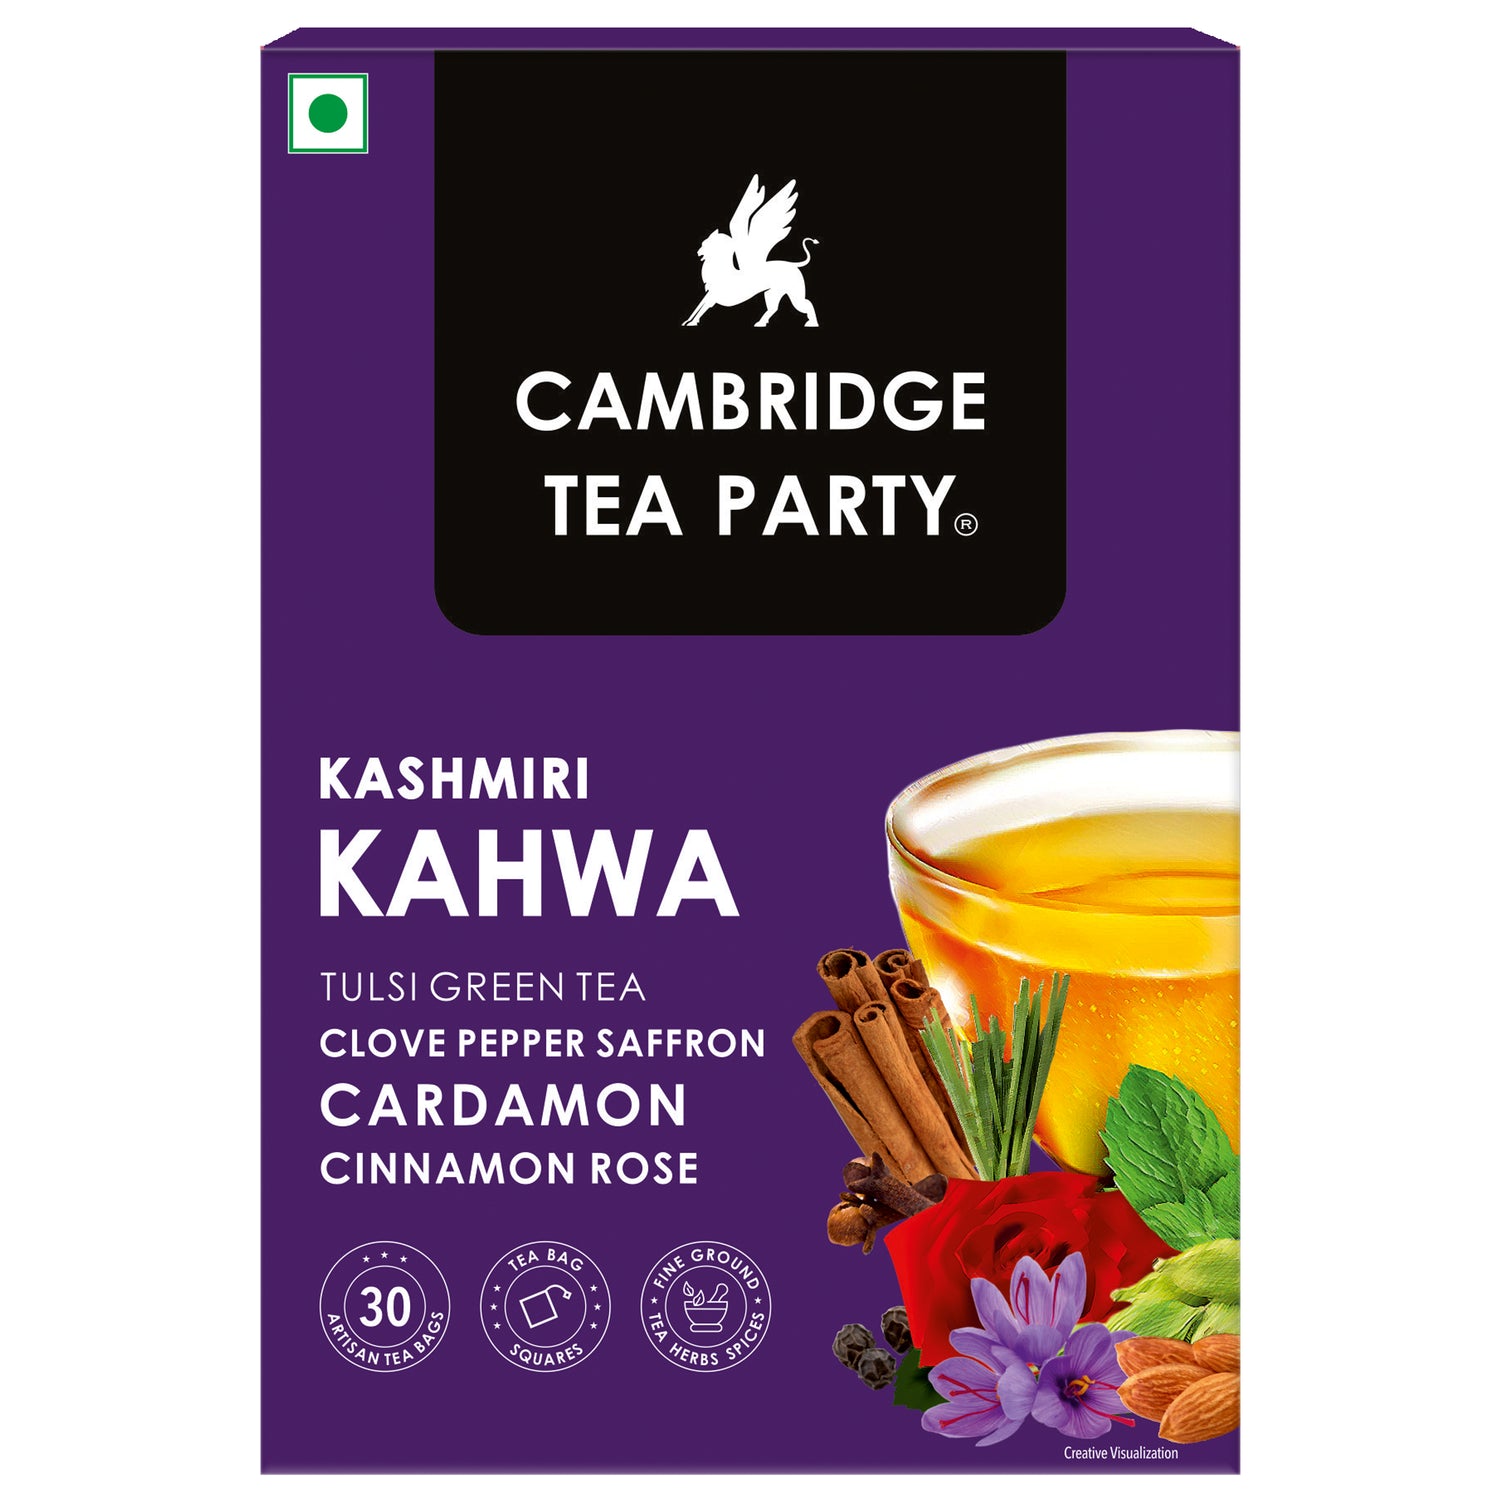 Kashmiri Kahwa 30 Tea Bags, Saffron Almond Cardamom Clove Pepper Cinnamon Rose Tulsi Green Tea 